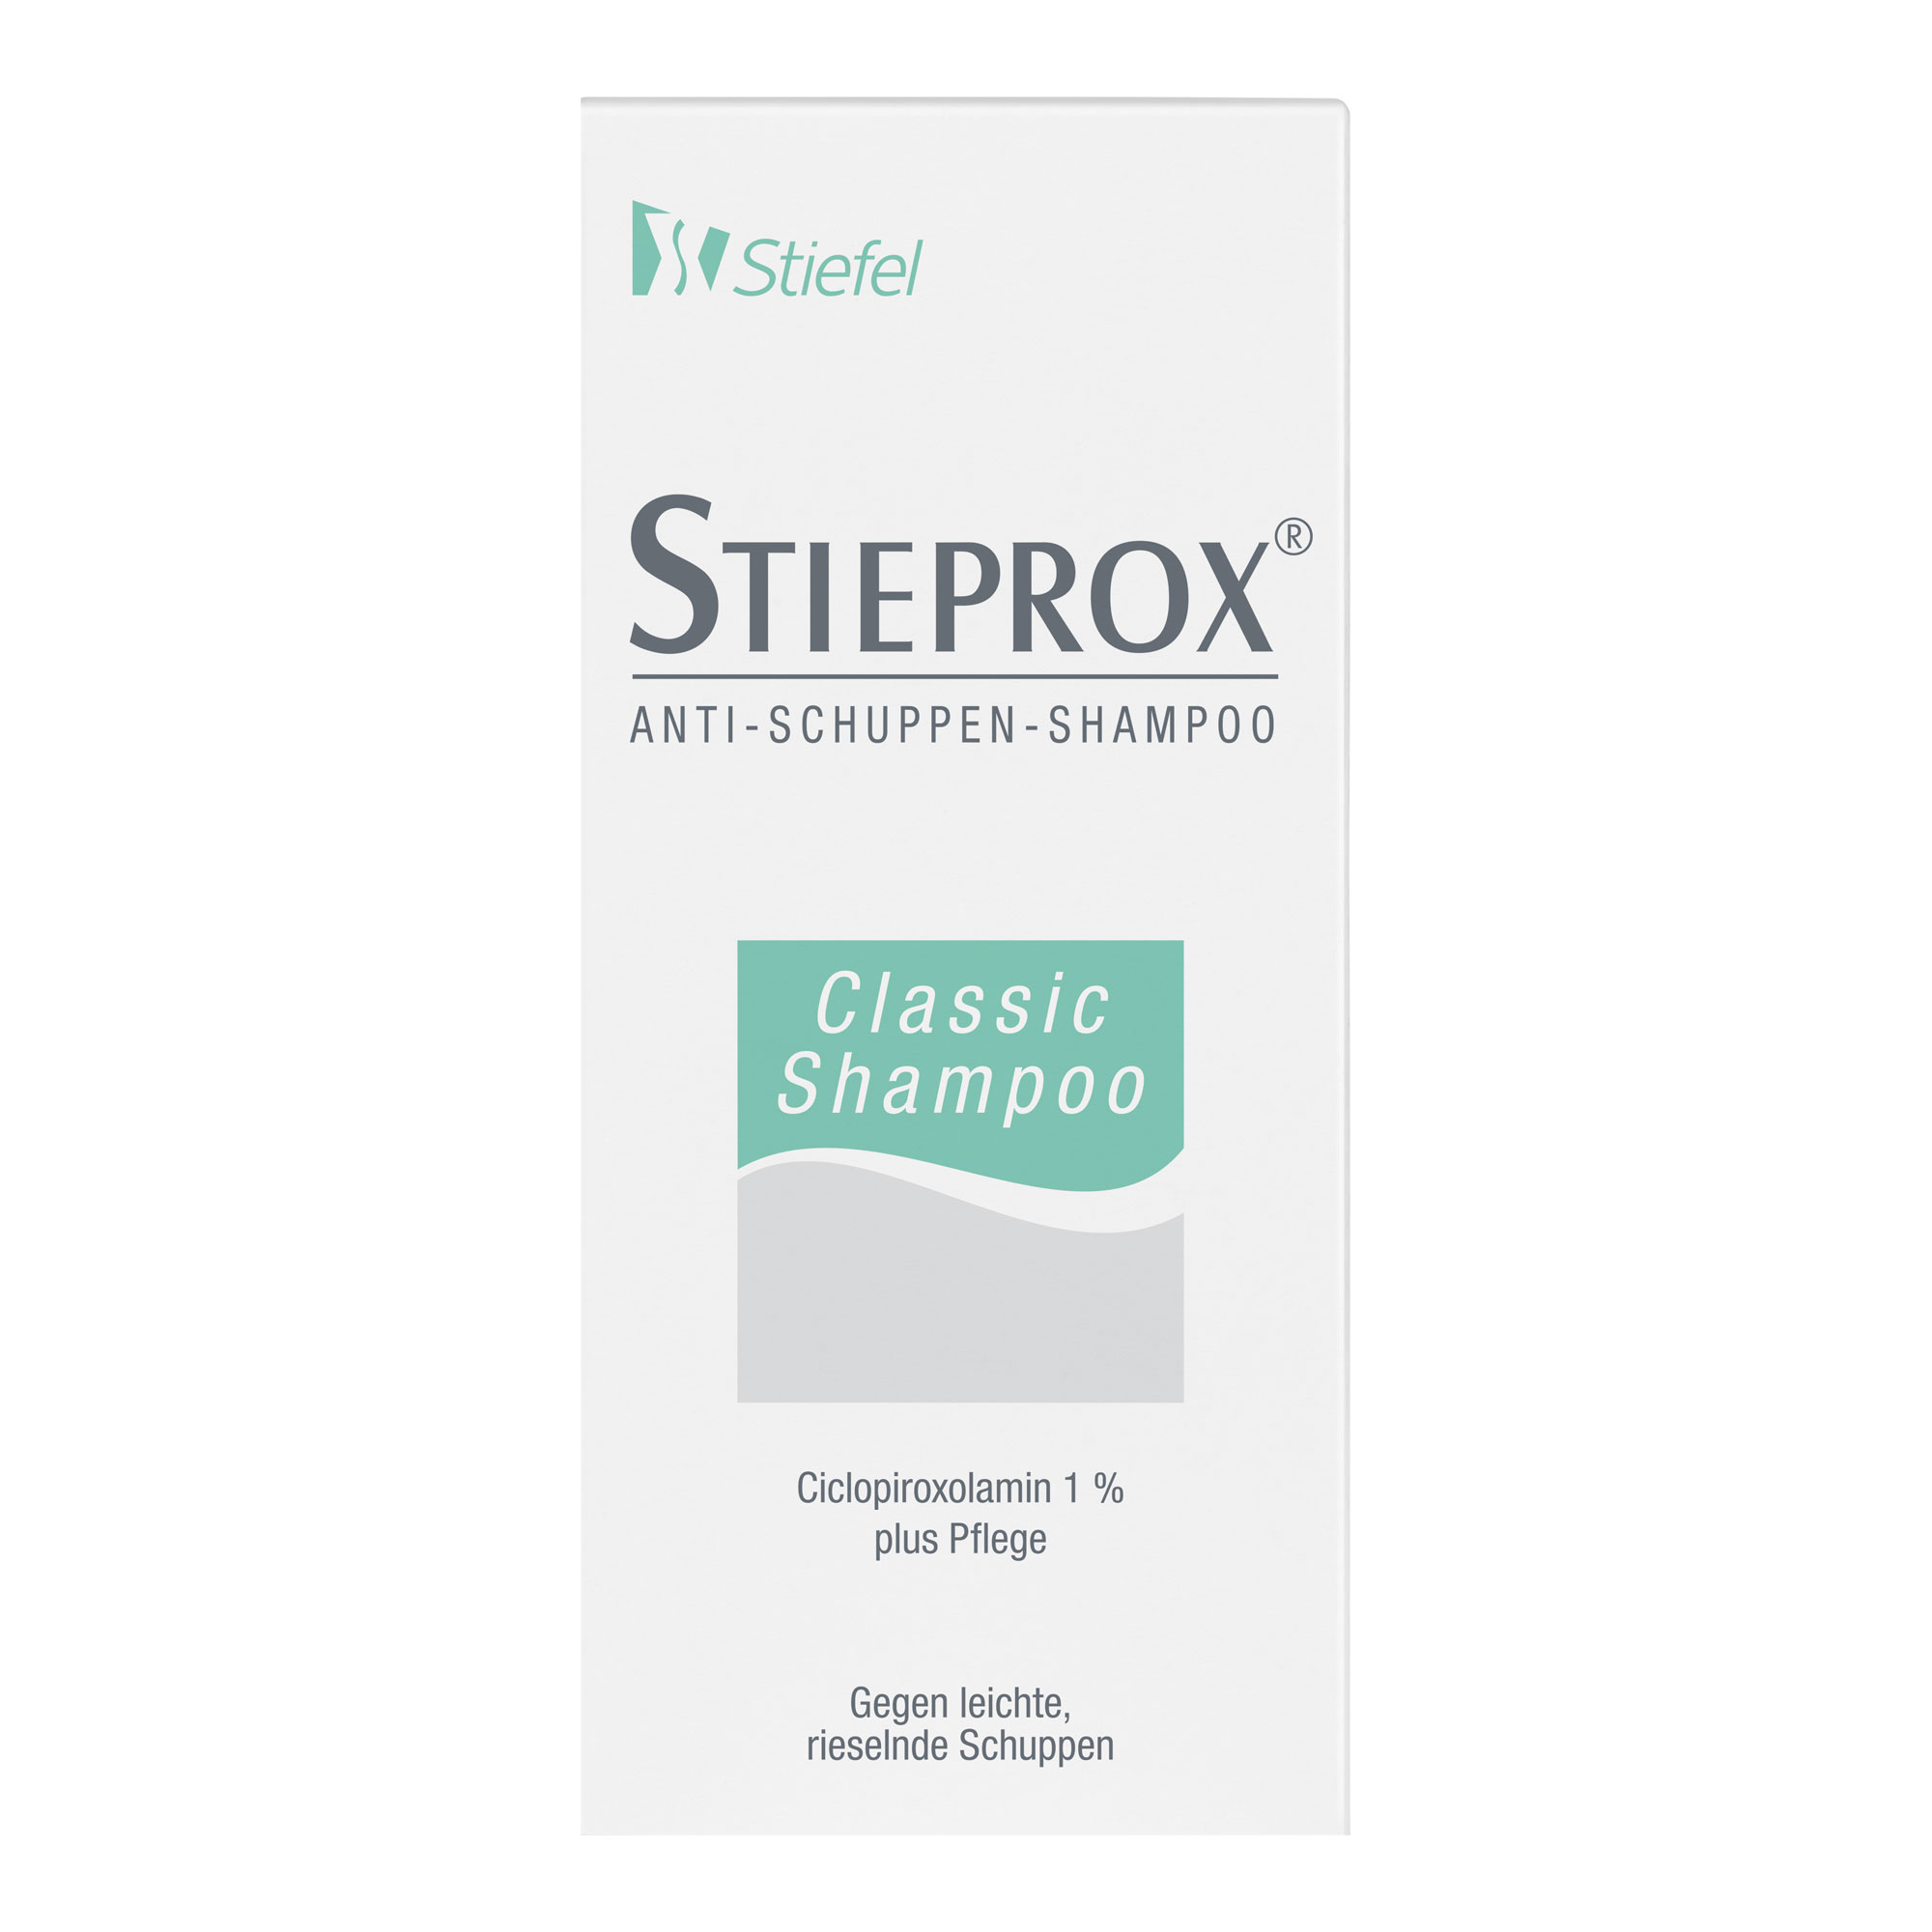 Stieprox Classic Shampoo